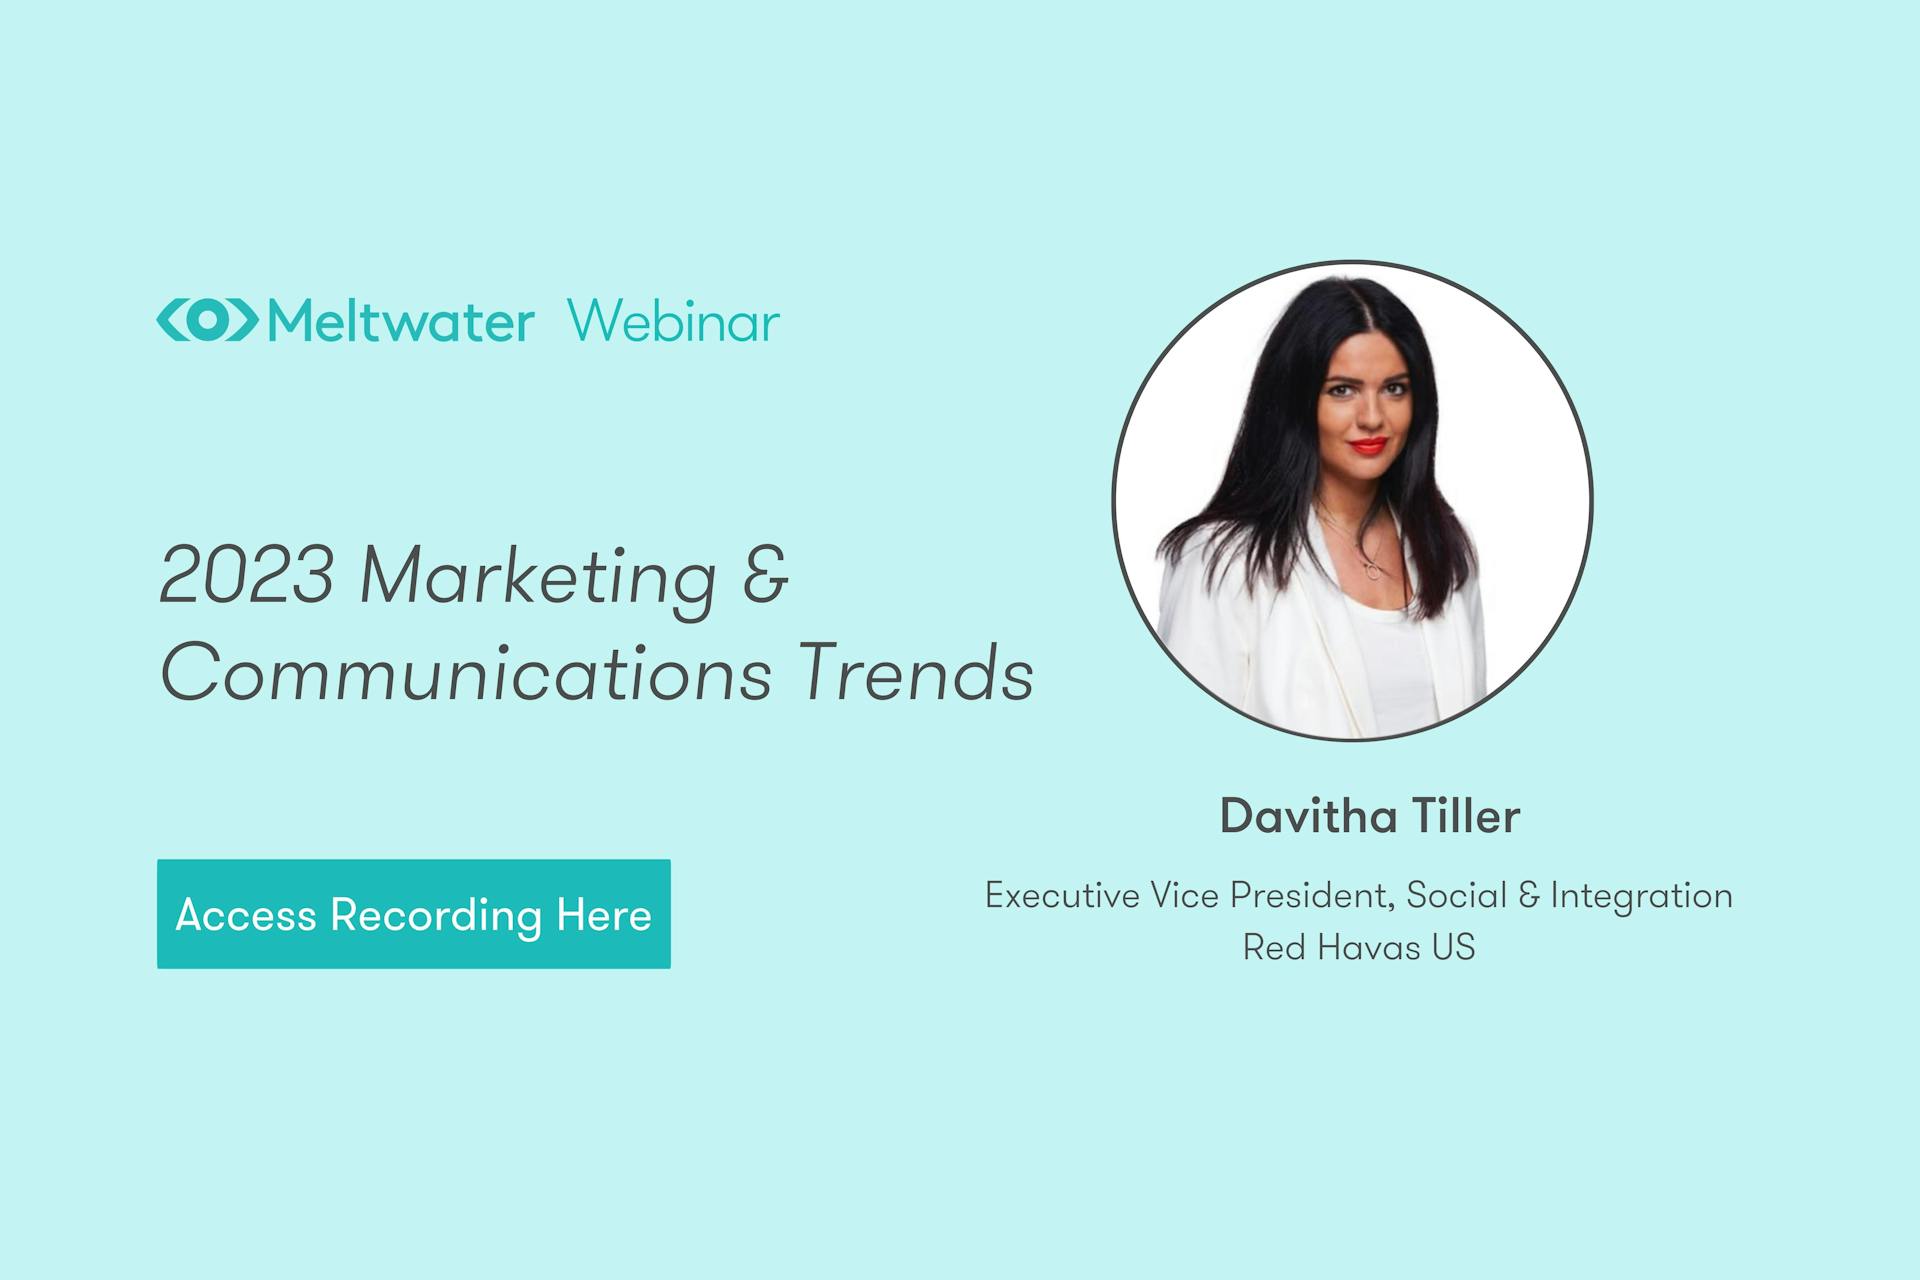 2023 Marketing & Communications Trends - Meltwater Webinar with Davitha Tiller